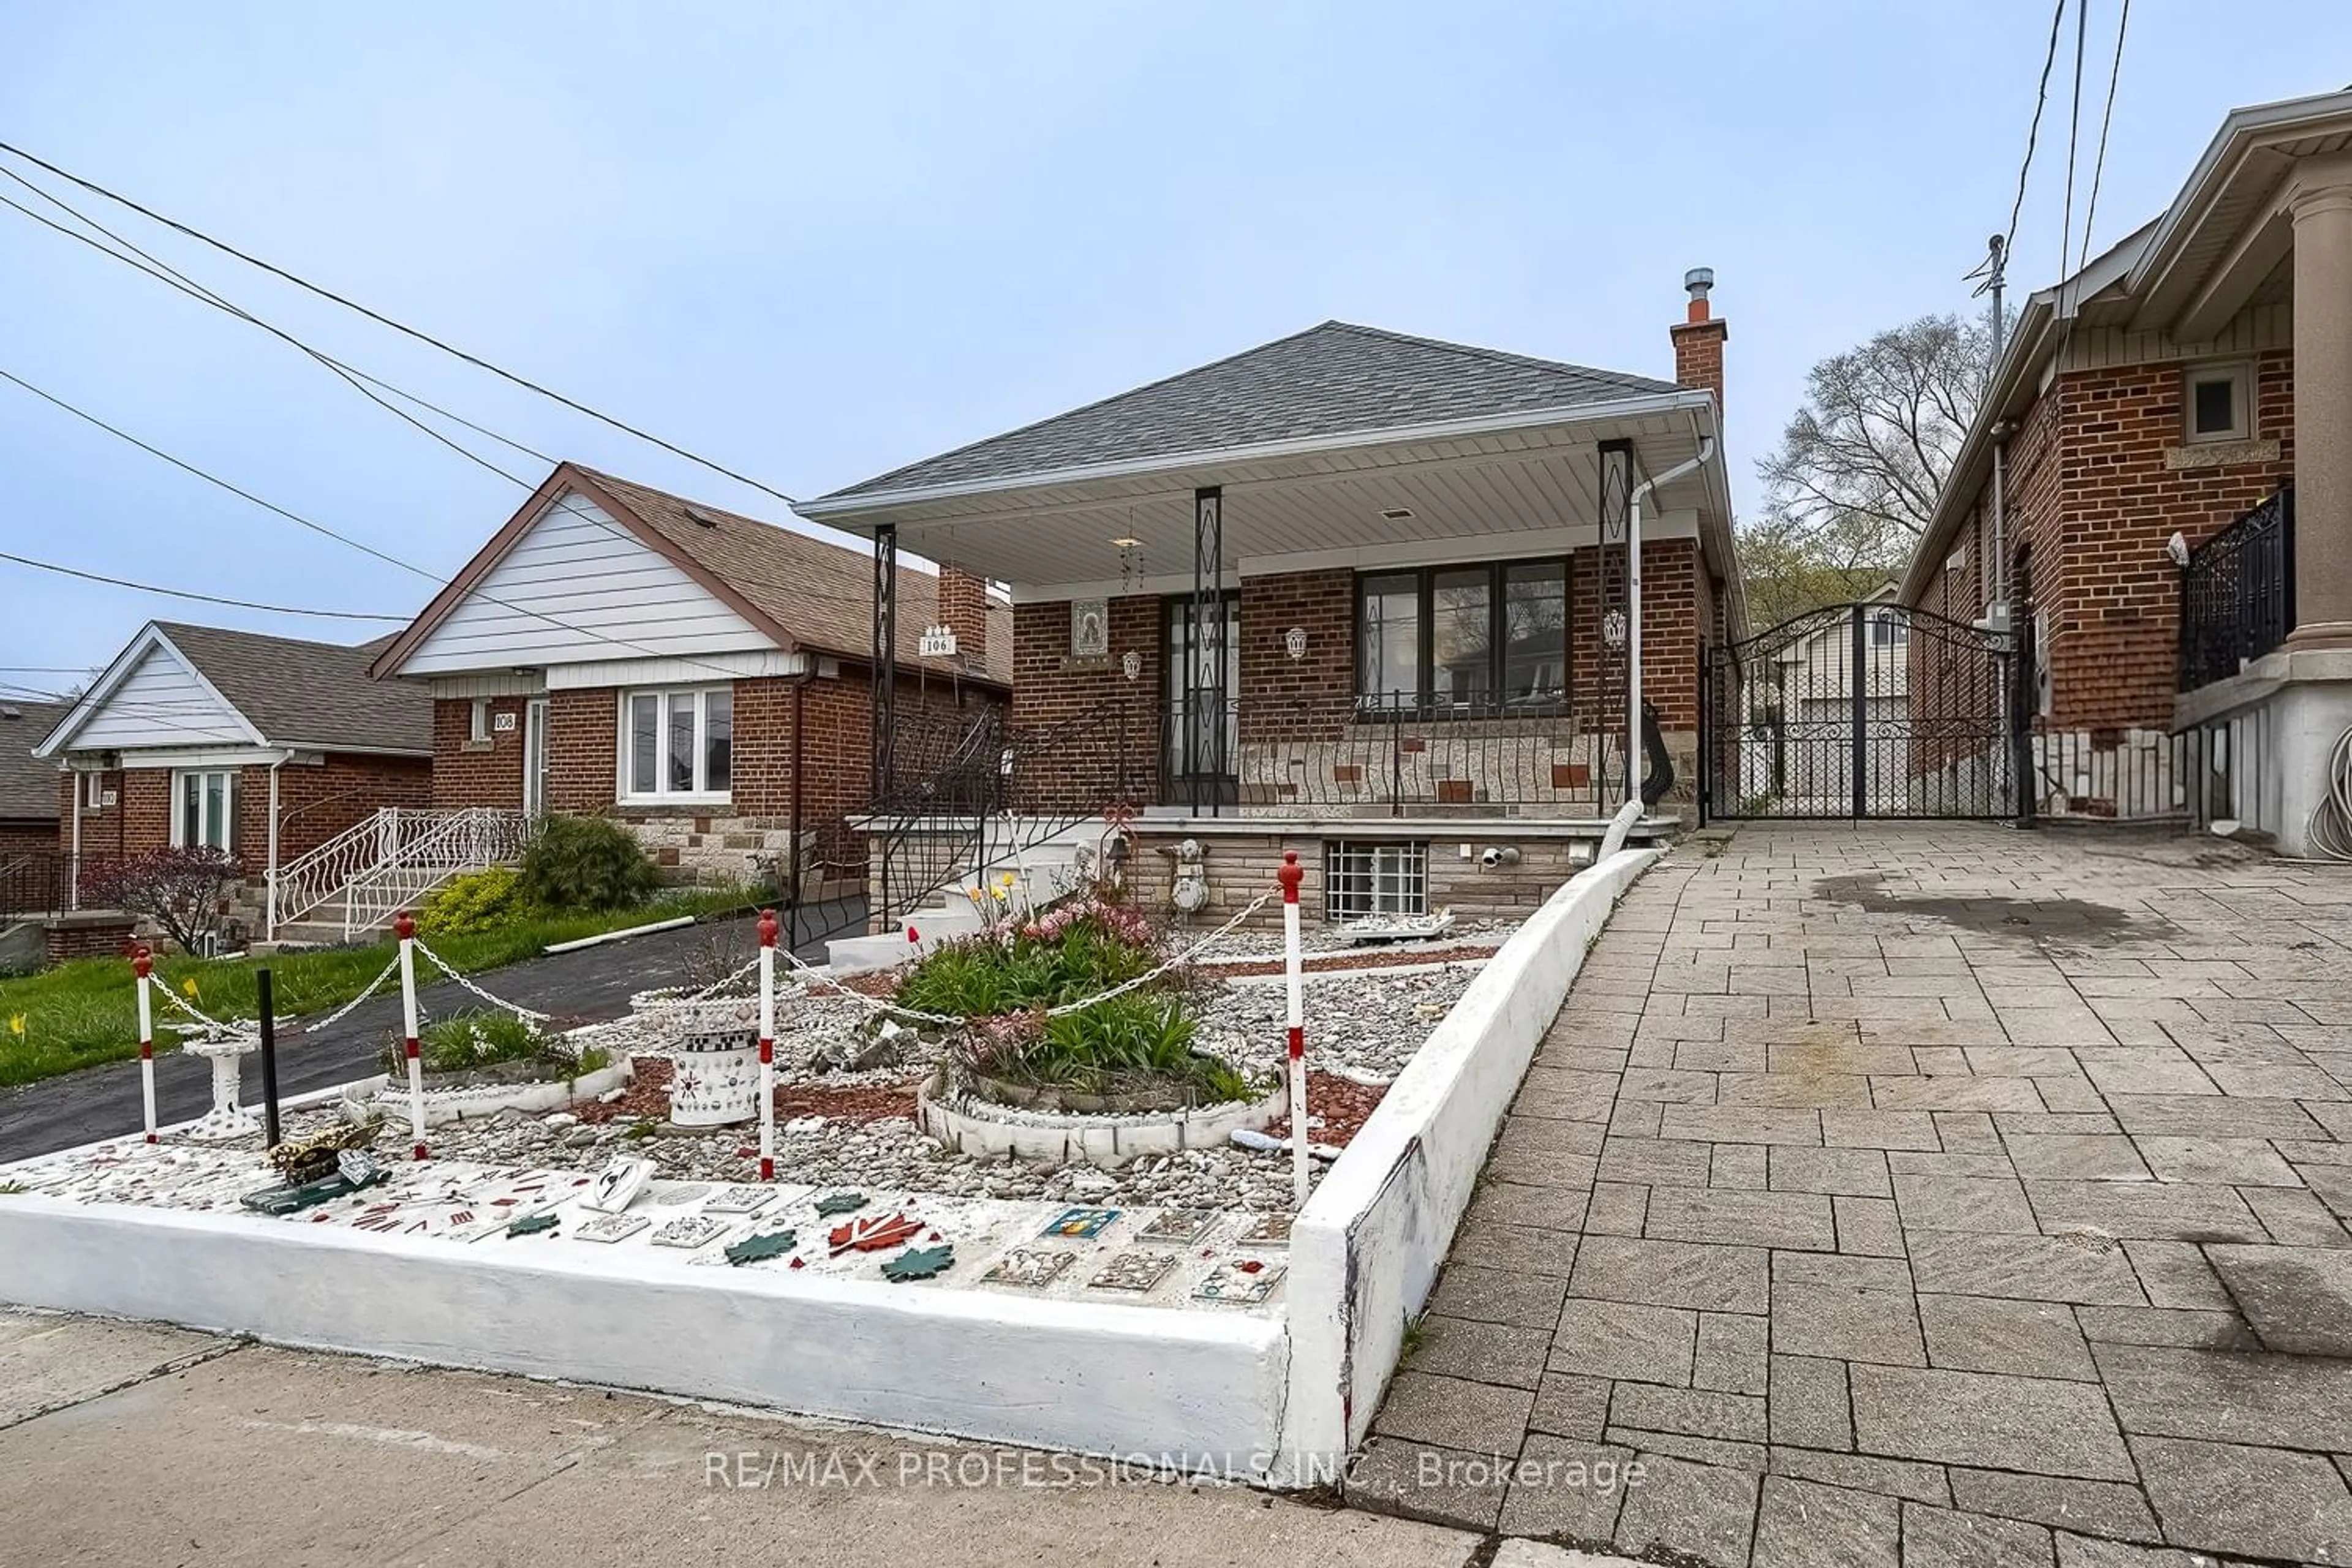 Home with brick exterior material for 106 Cameron Ave, Toronto Ontario M6M 1R3